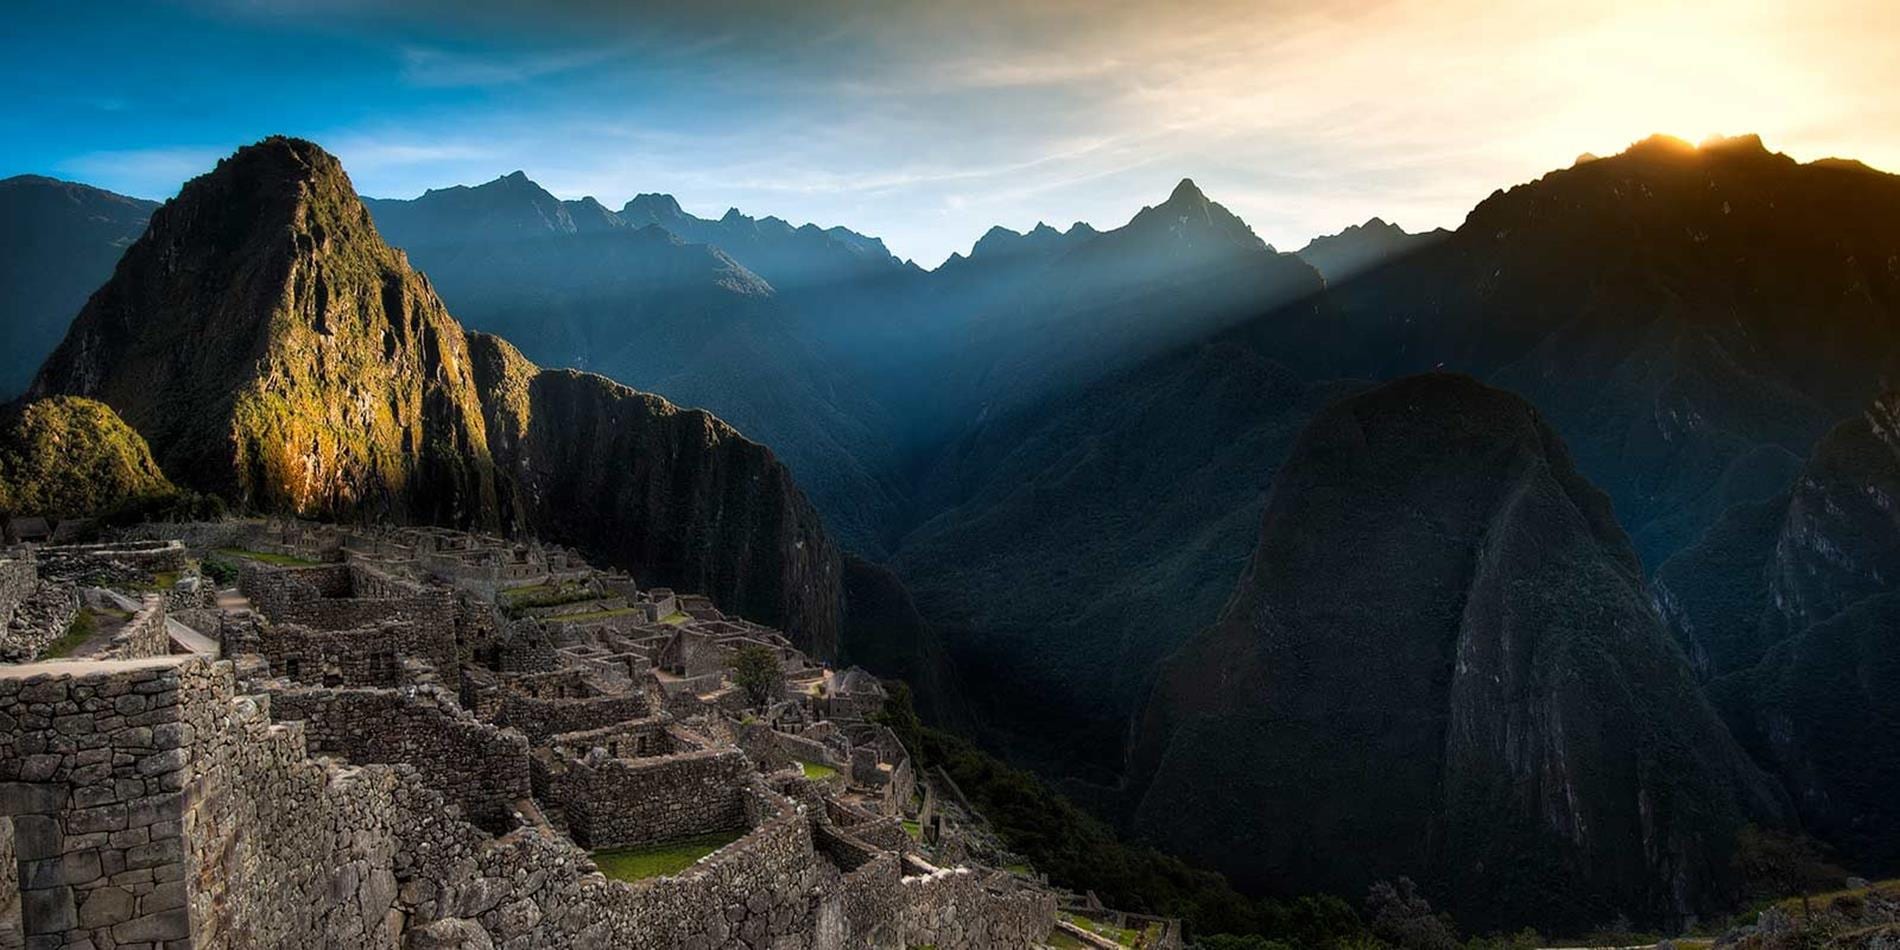 View looking towards a mountain range at sunset, Peru